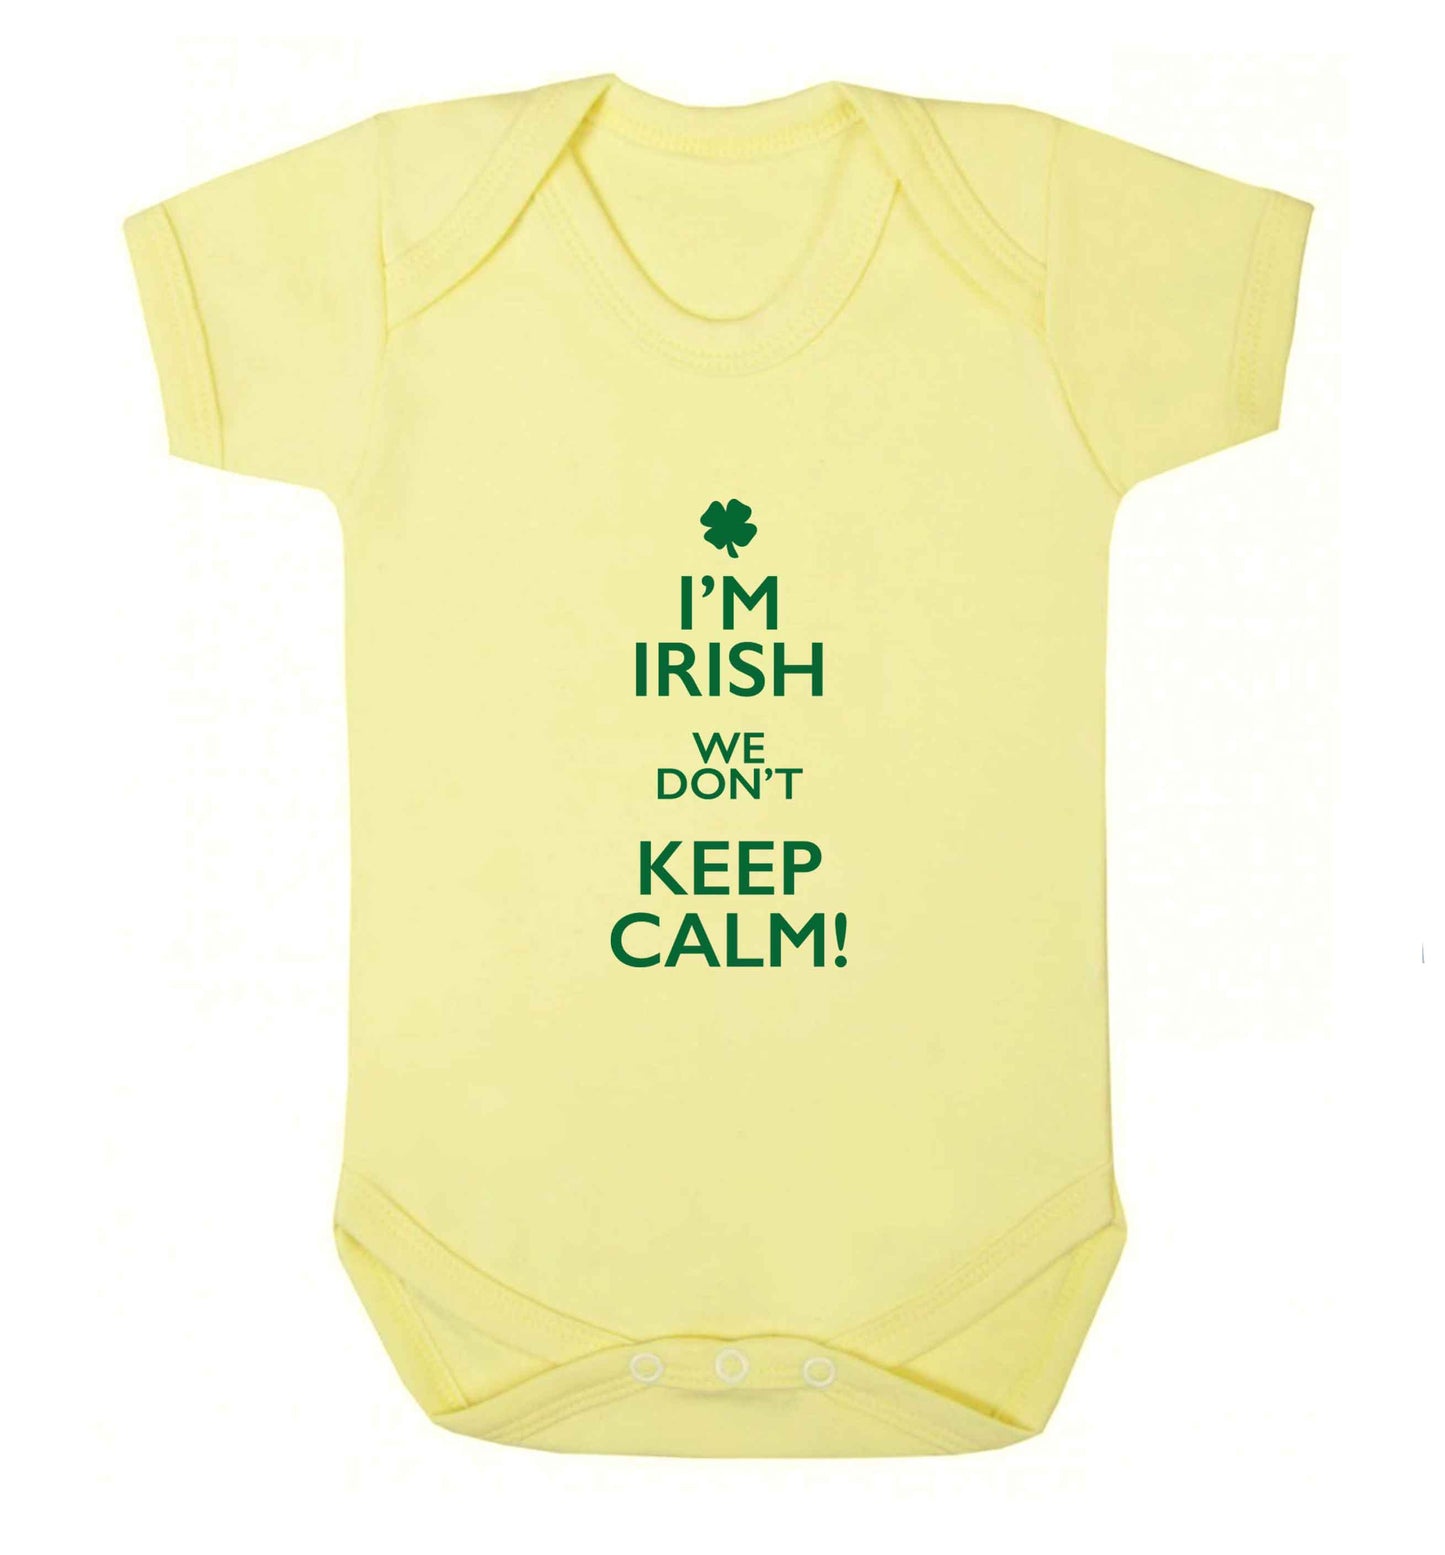 I'm Irish we don't keep calm baby vest pale yellow 18-24 months